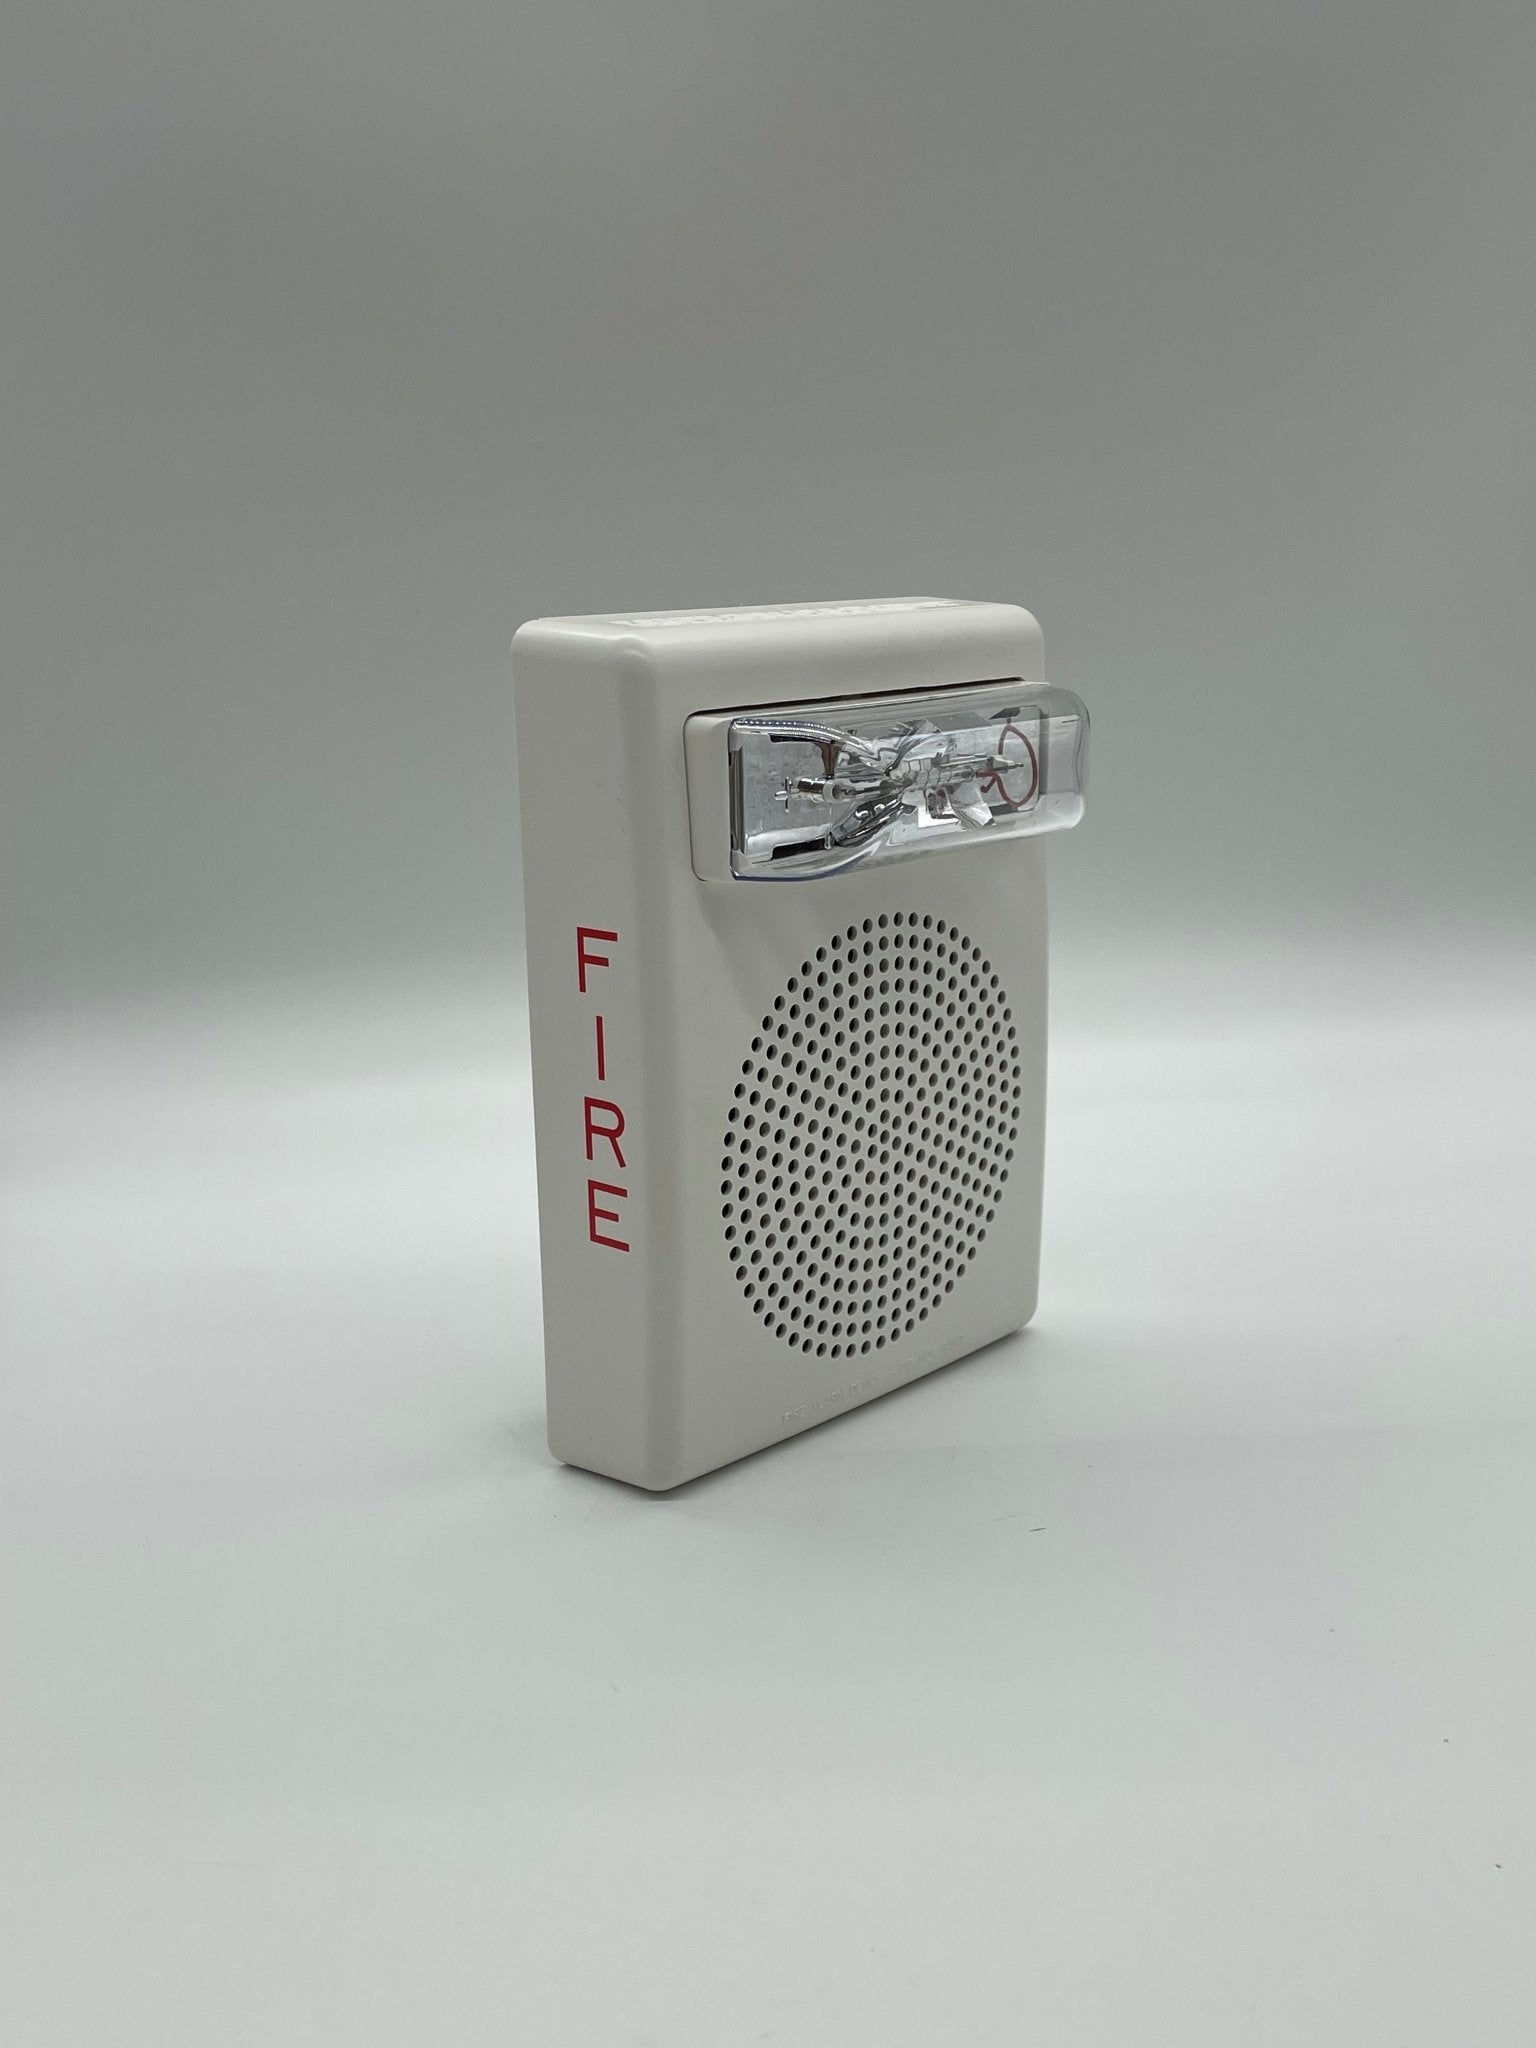 Wheelock E50-24MCW-FW - The Fire Alarm Supplier